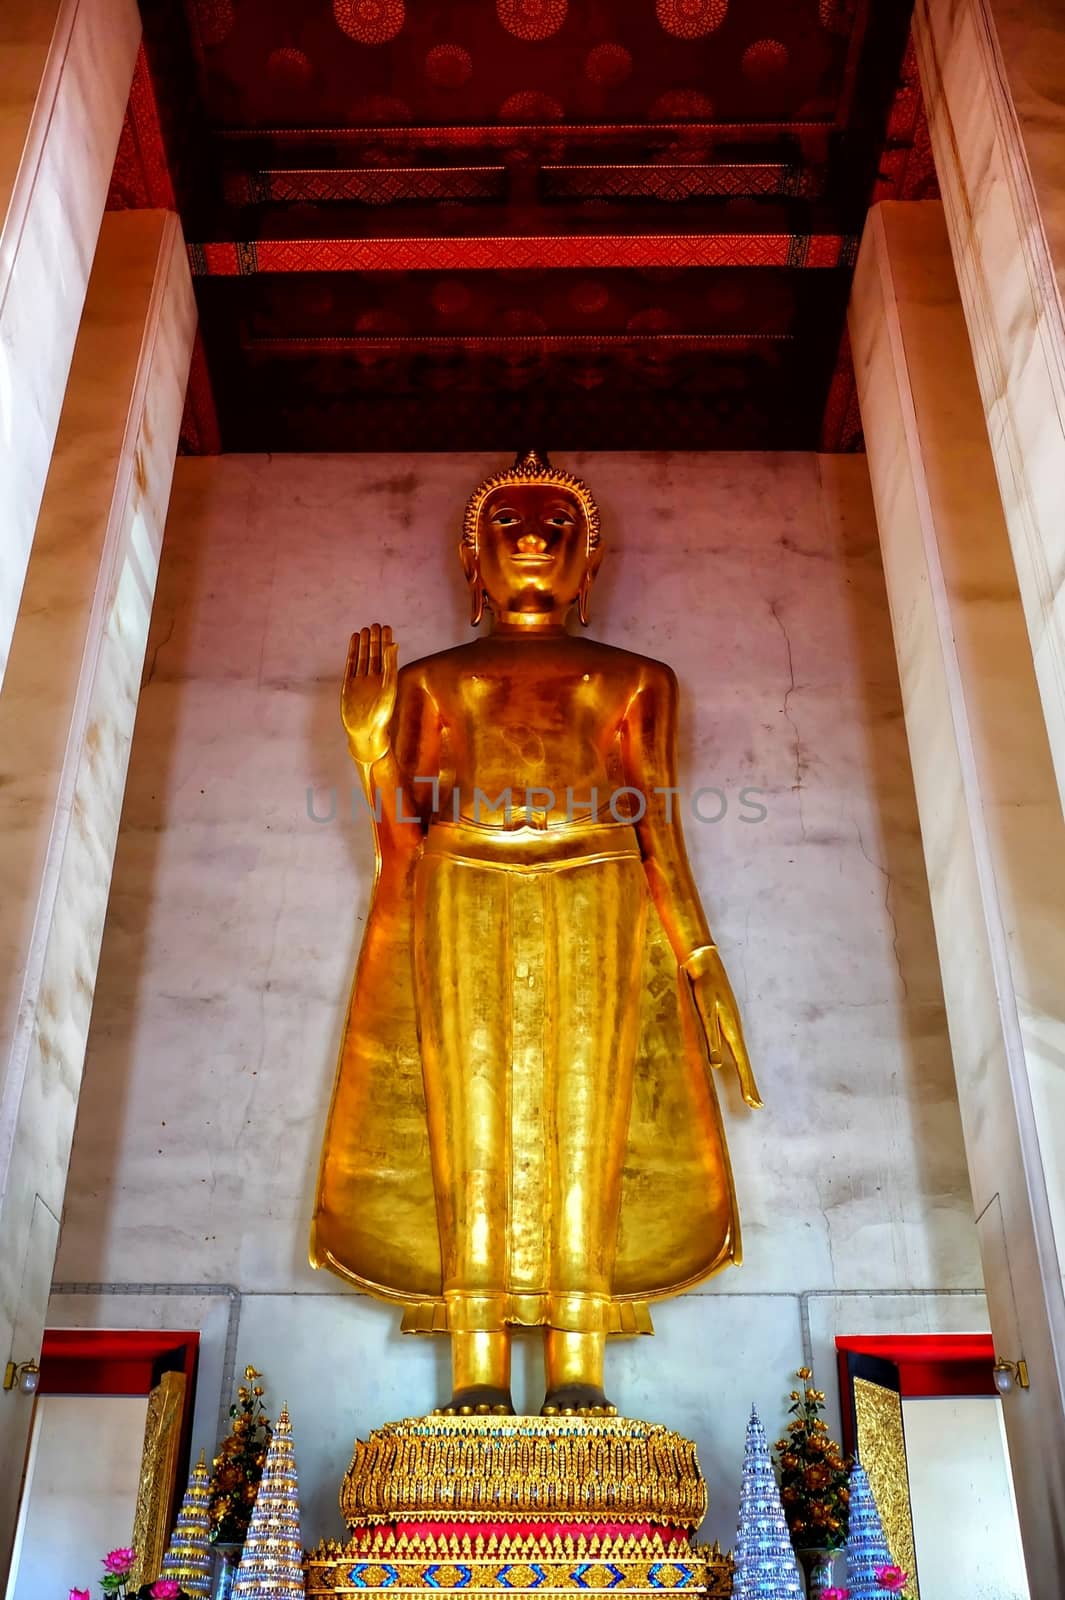 Ancient Huge Standing Buddha Image at Wat Saket Temple, Bangkok Thailand.